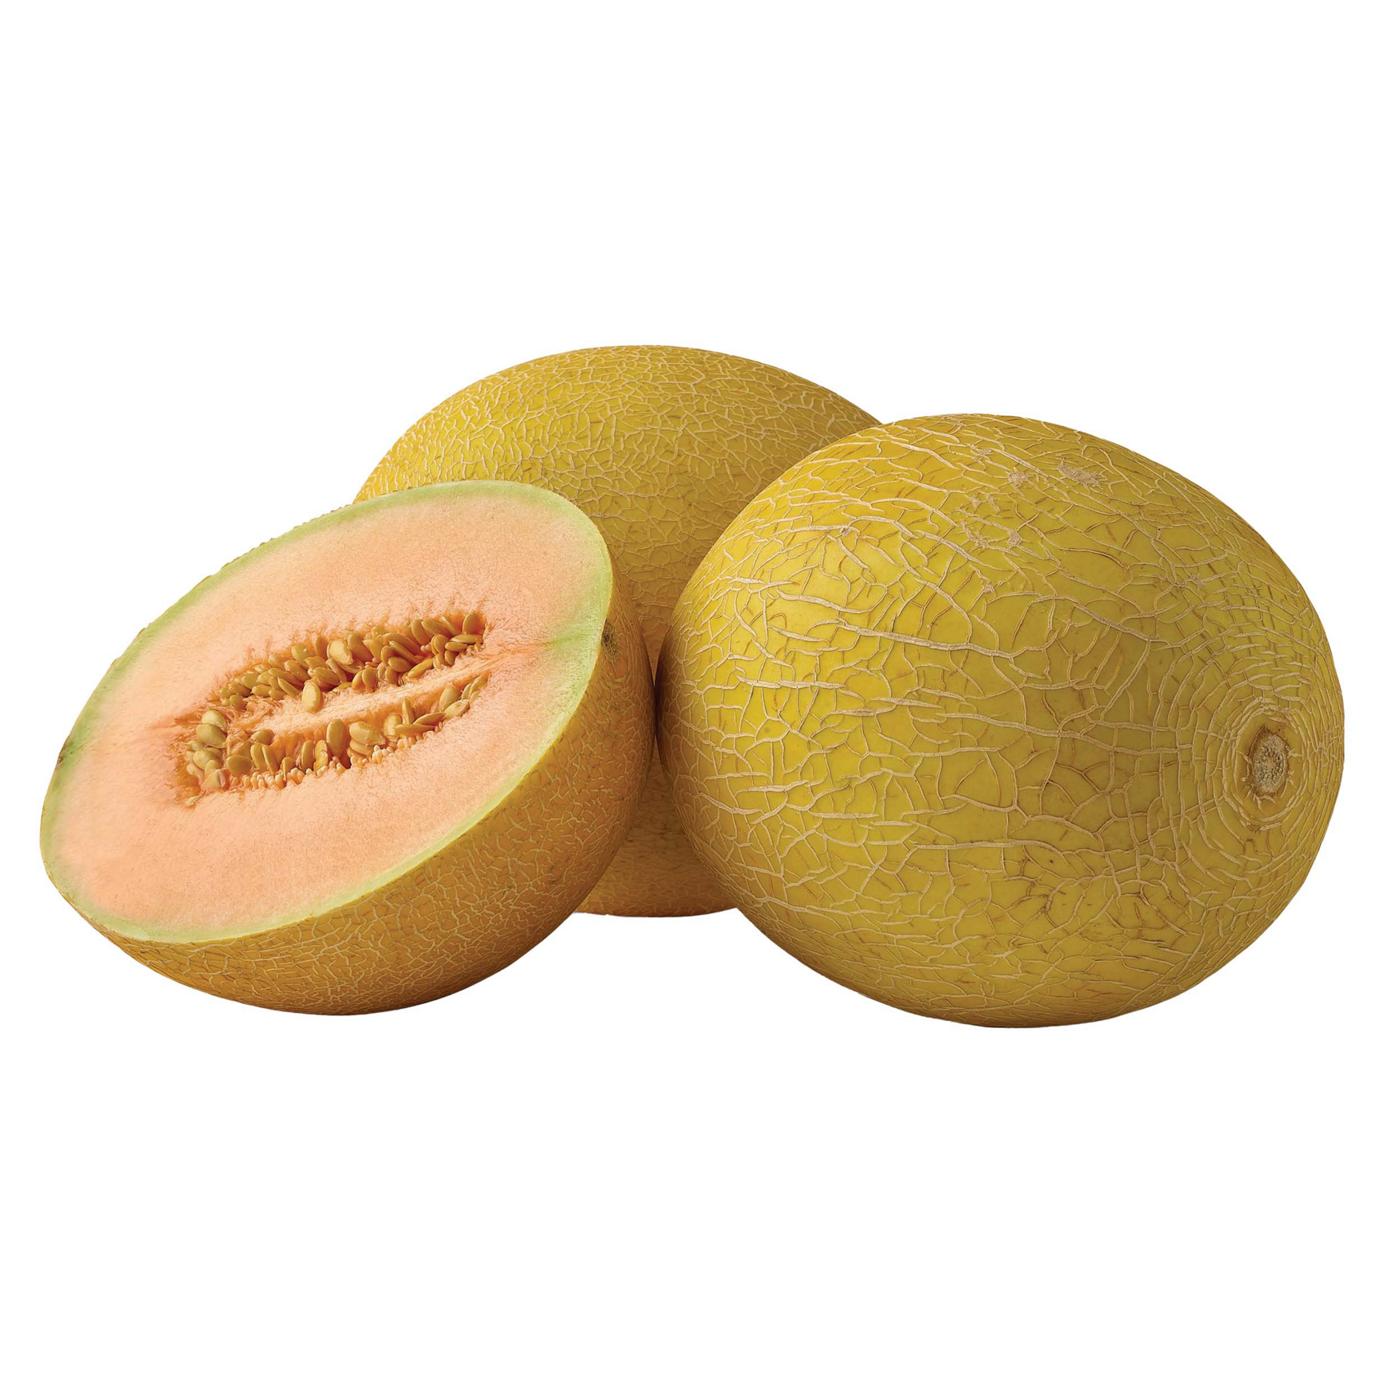 H-E-B Texas Roots Fresh Golden Cantaloupe; image 4 of 4